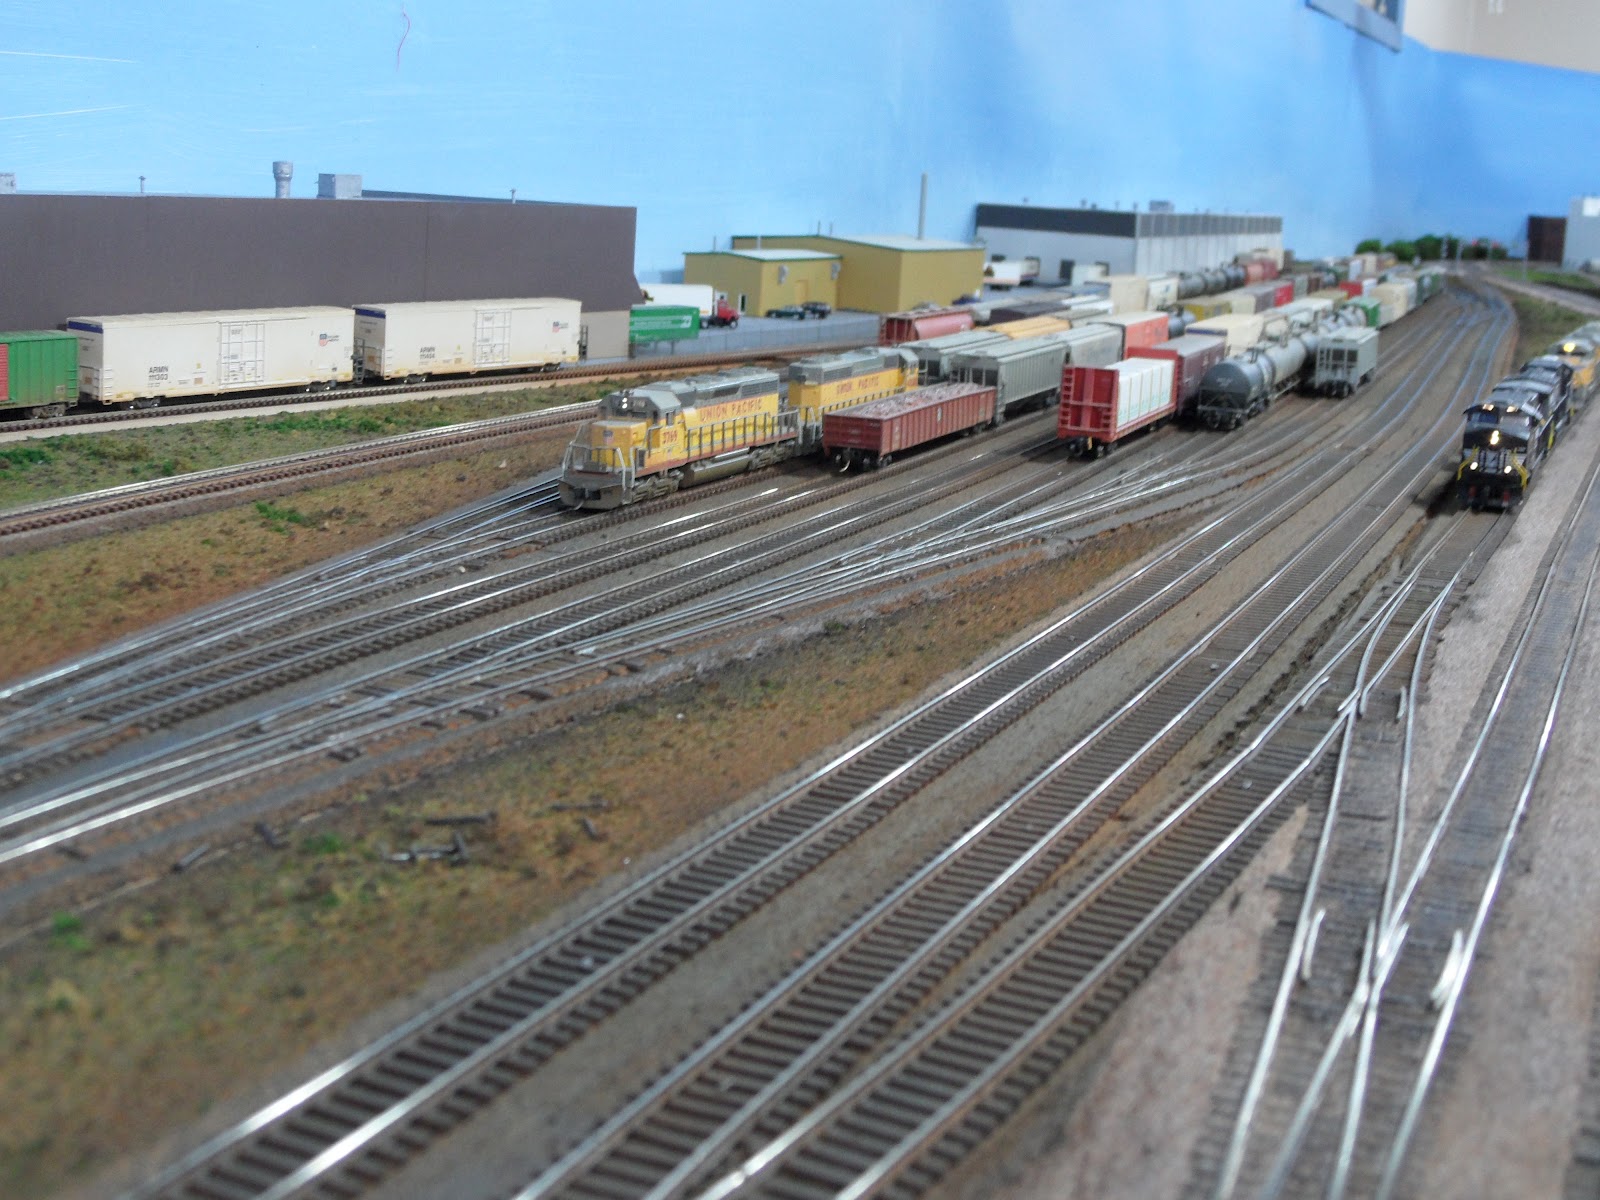 Scale Union Pacific Railroad - Class I Midwest Model Railroading 